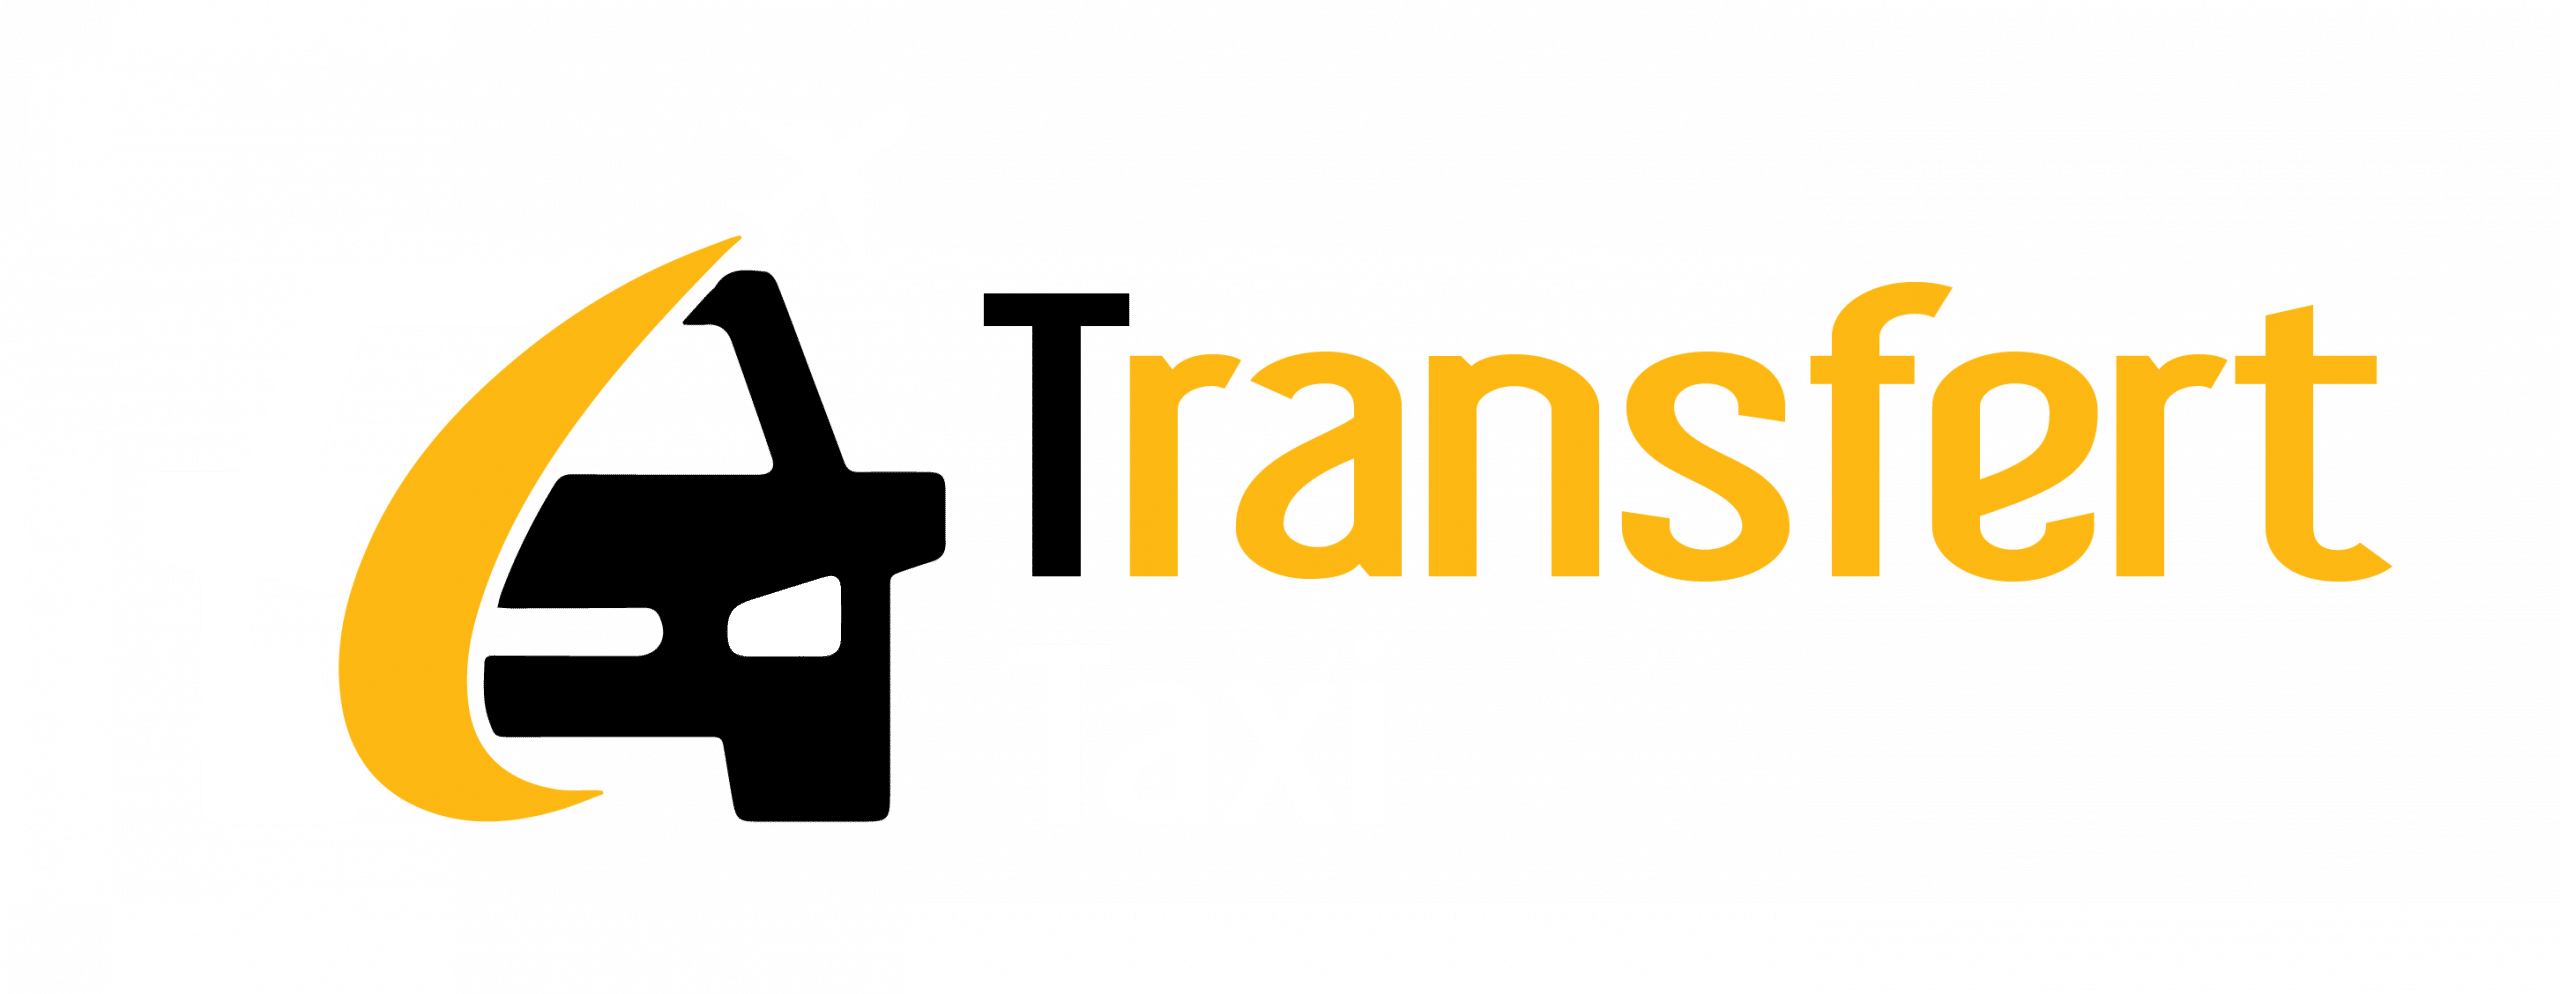 taxi-transfert-aerop